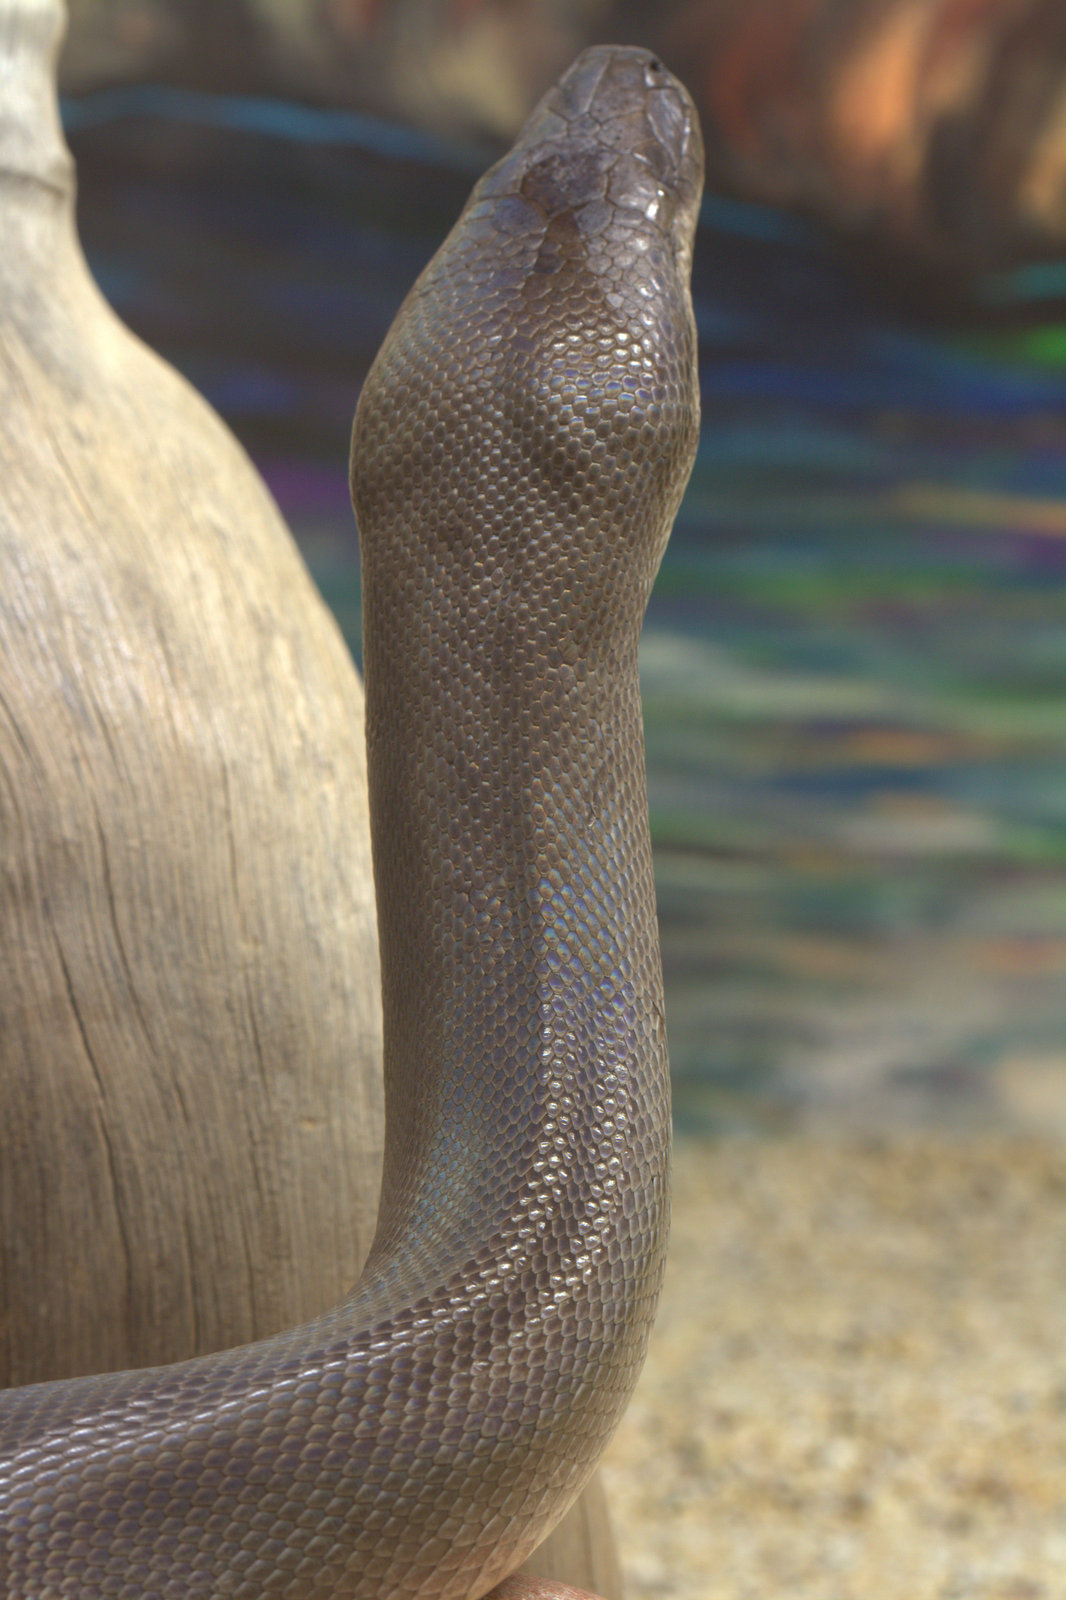 jankazblogspot: Python - Reptile Park